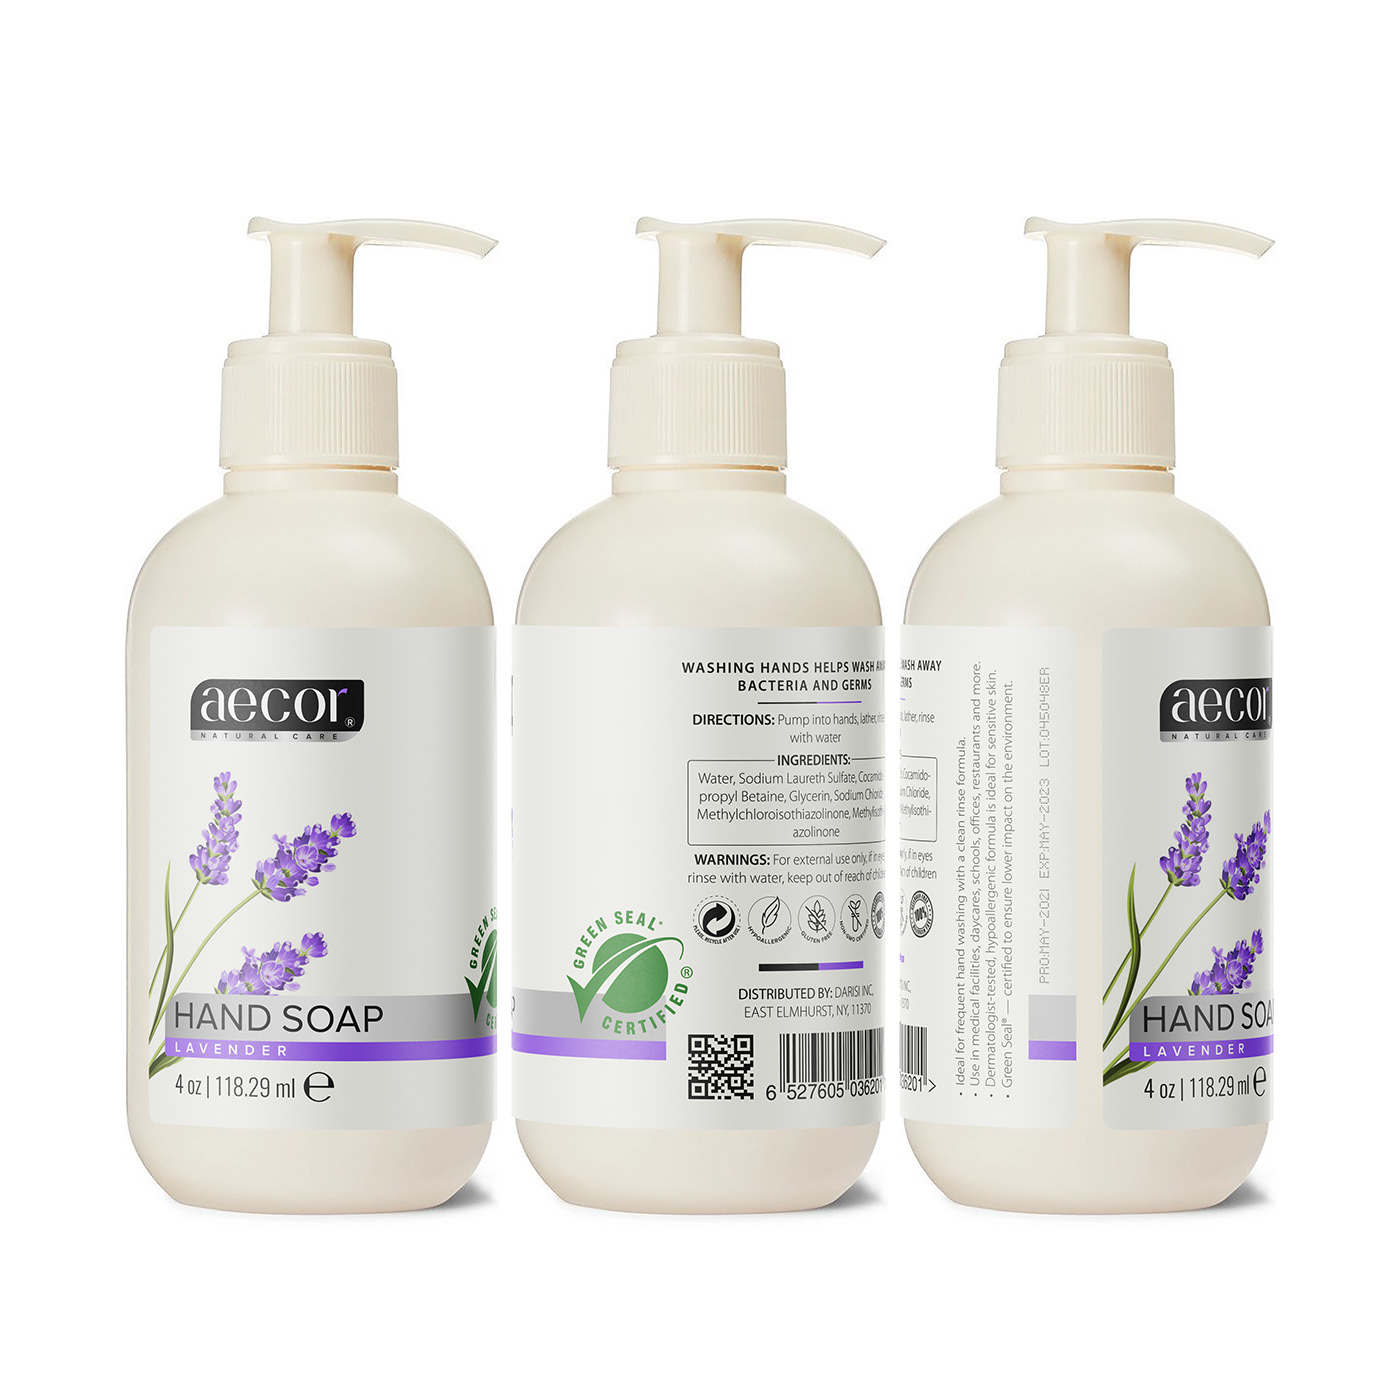 Hand Soap Label liquid soap packaging design bottle label cosmetics label Packaging product design  soap